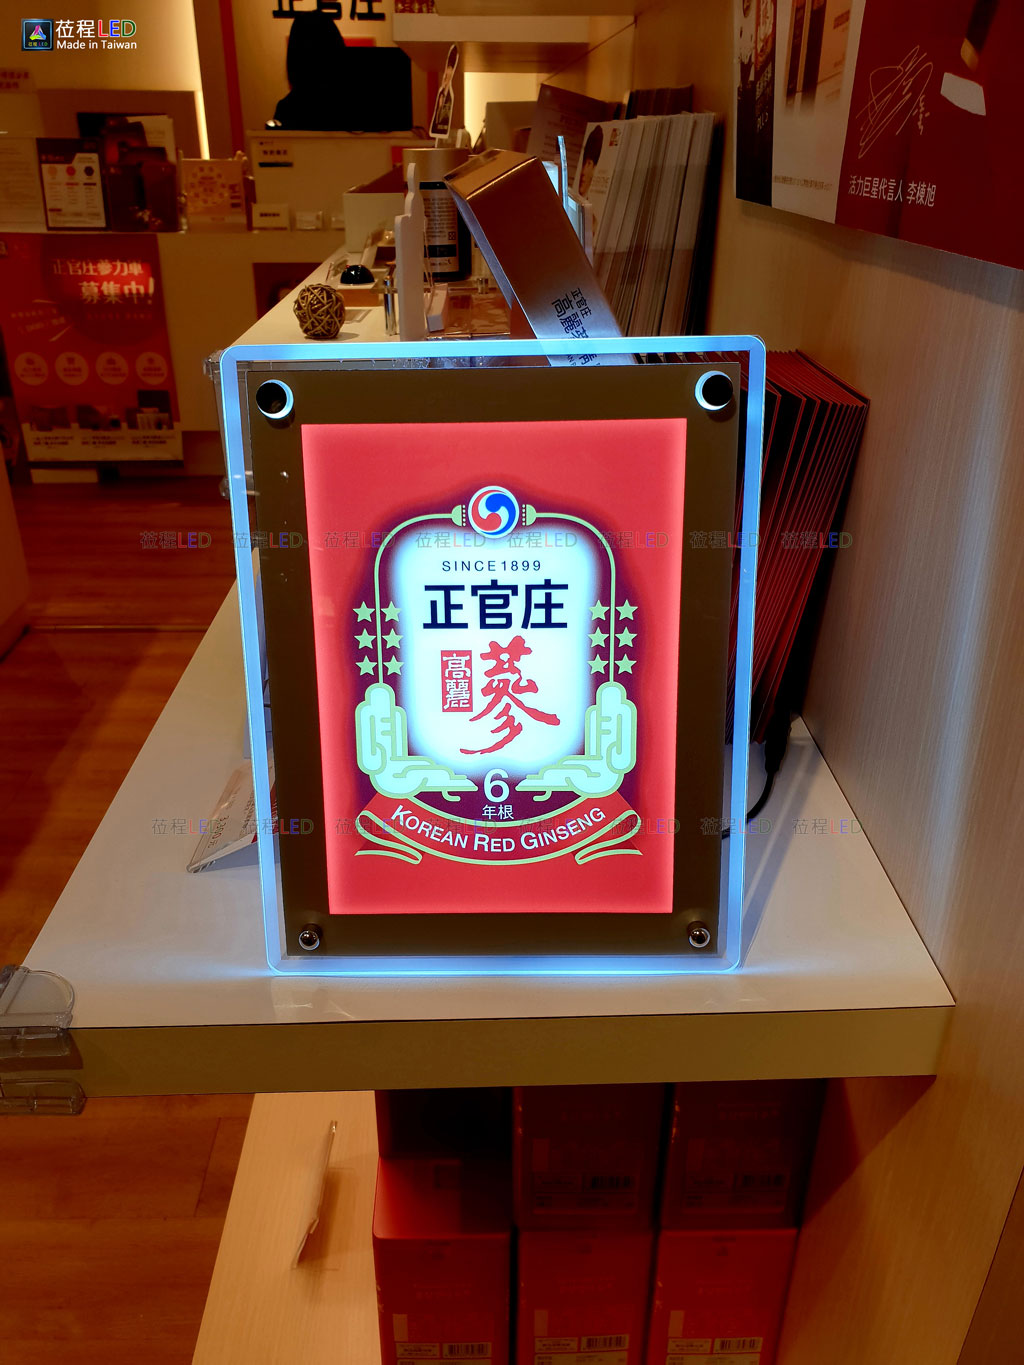 B5桌上型廣告燈箱-水晶燈箱-磁吸式燈箱